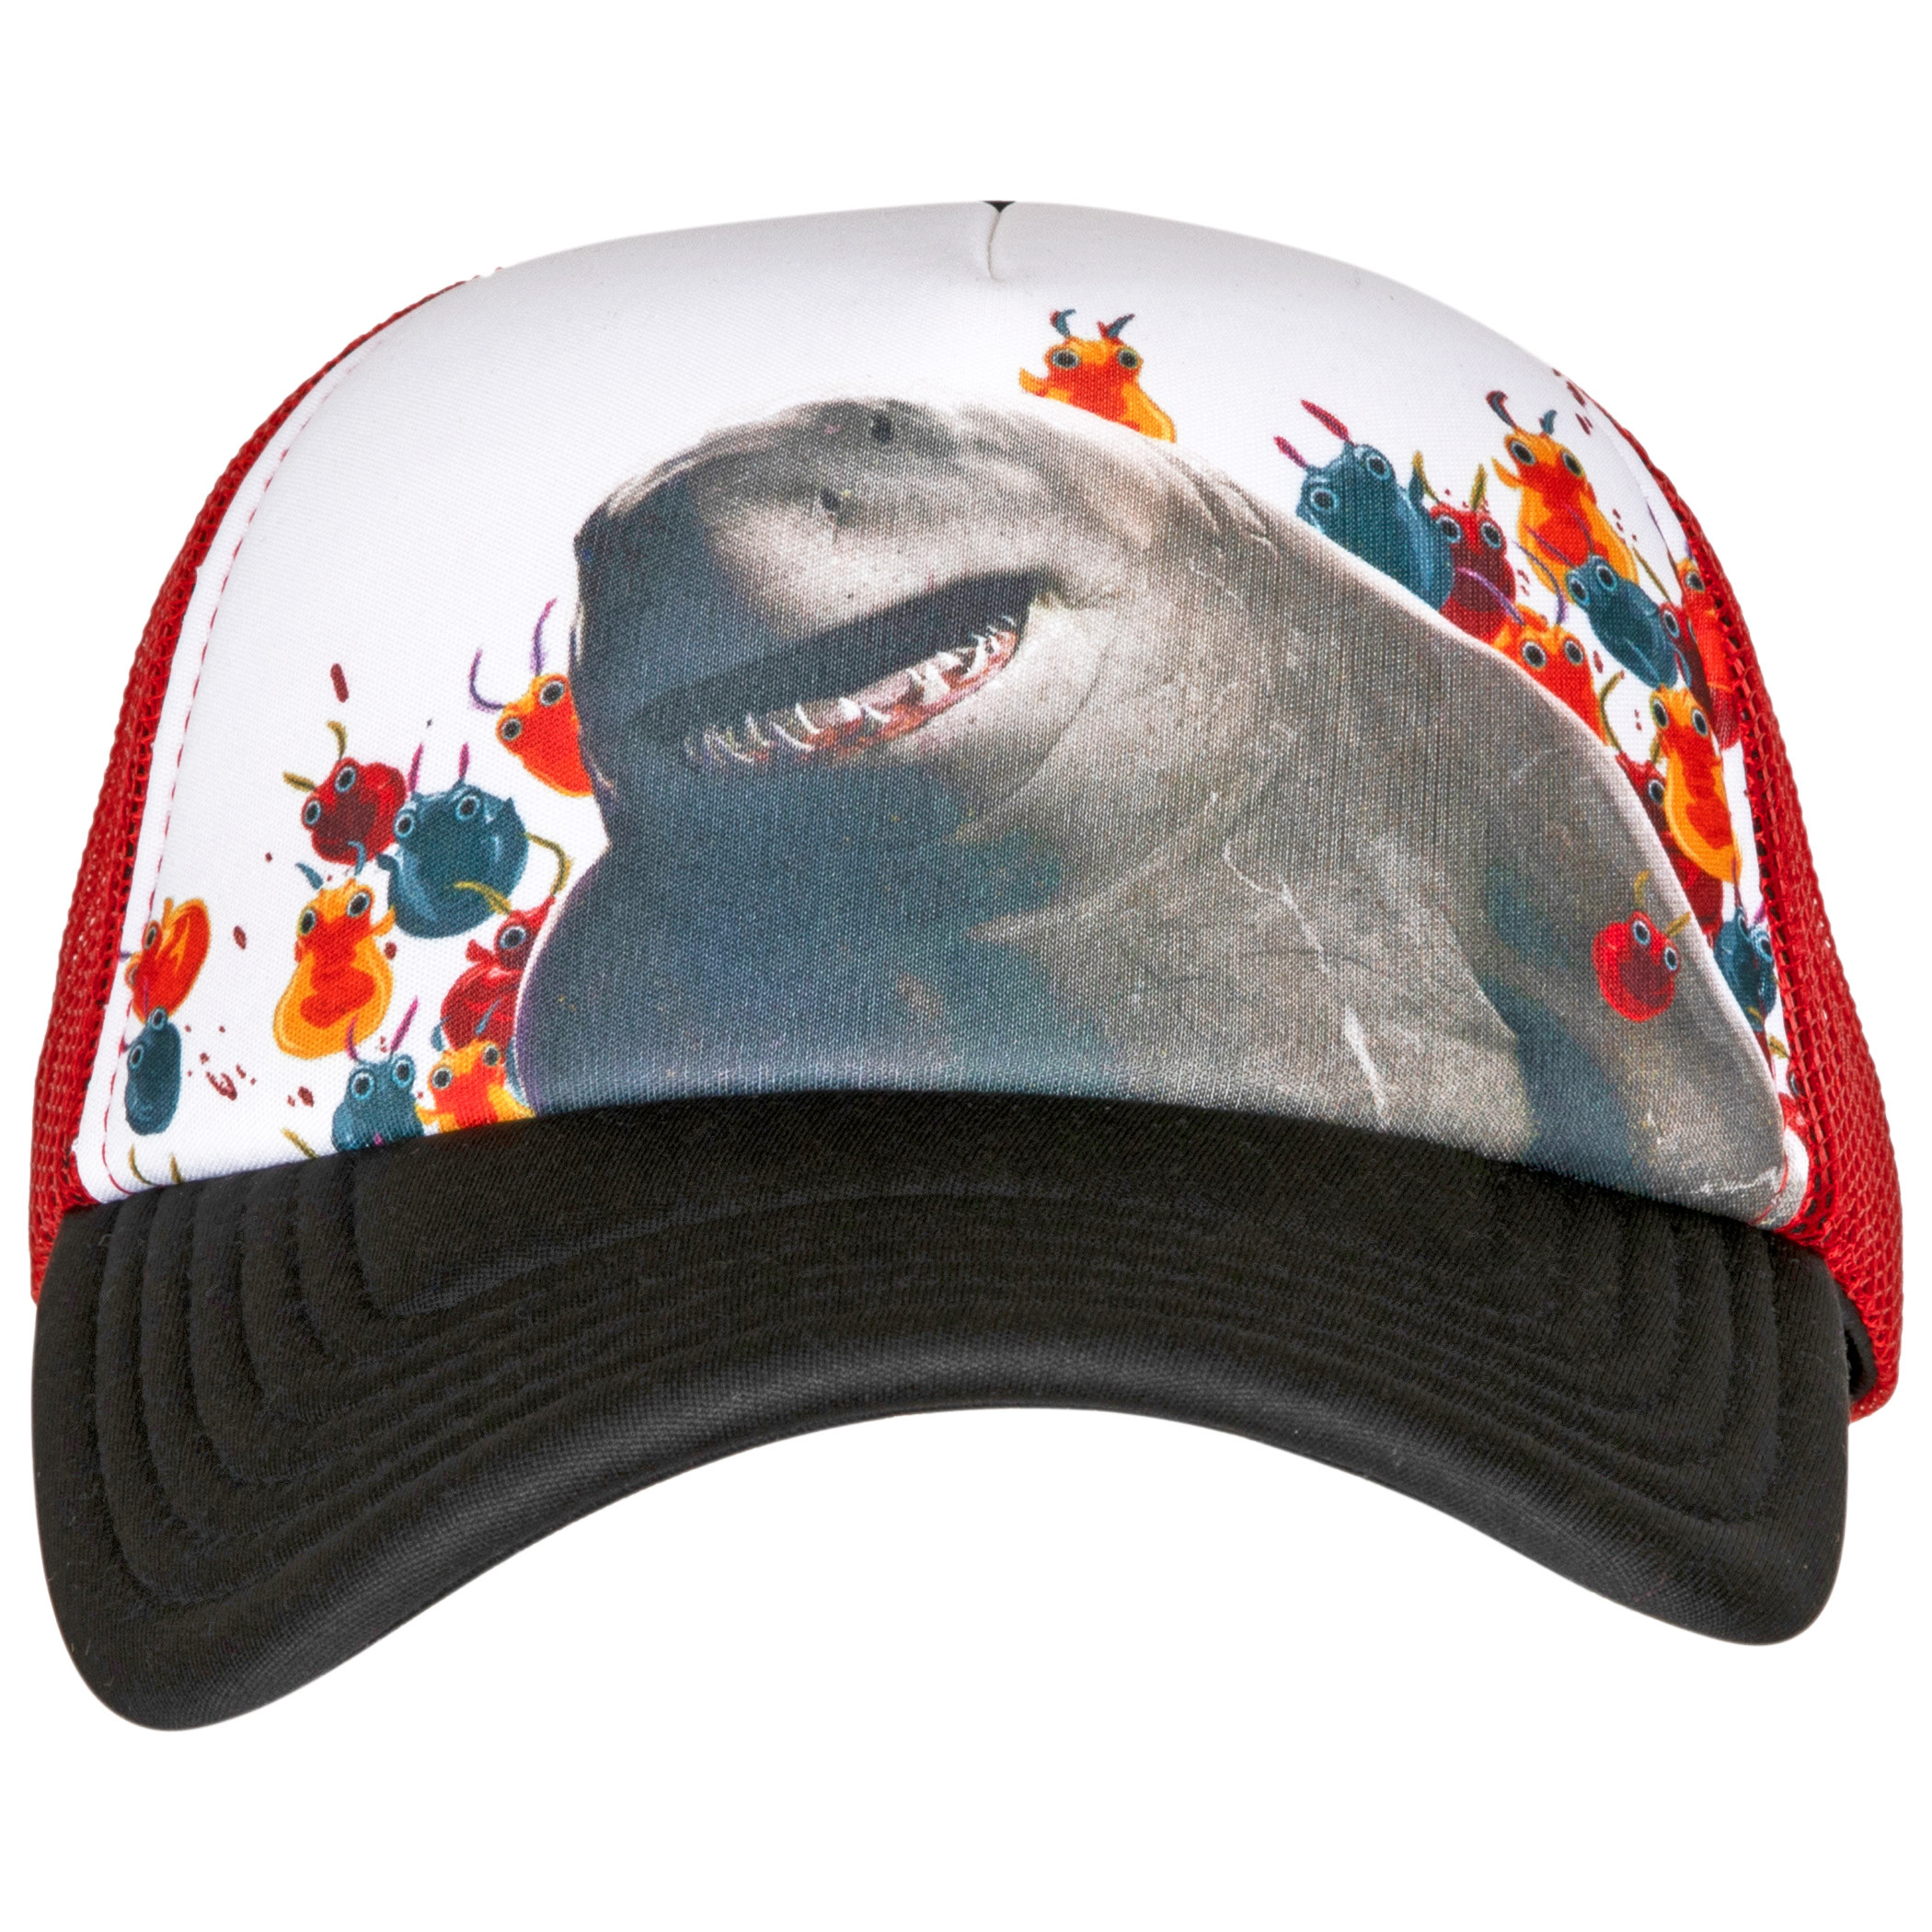 The Suicide Squad King Shark Red Mesh Snapback Adjustable Hat